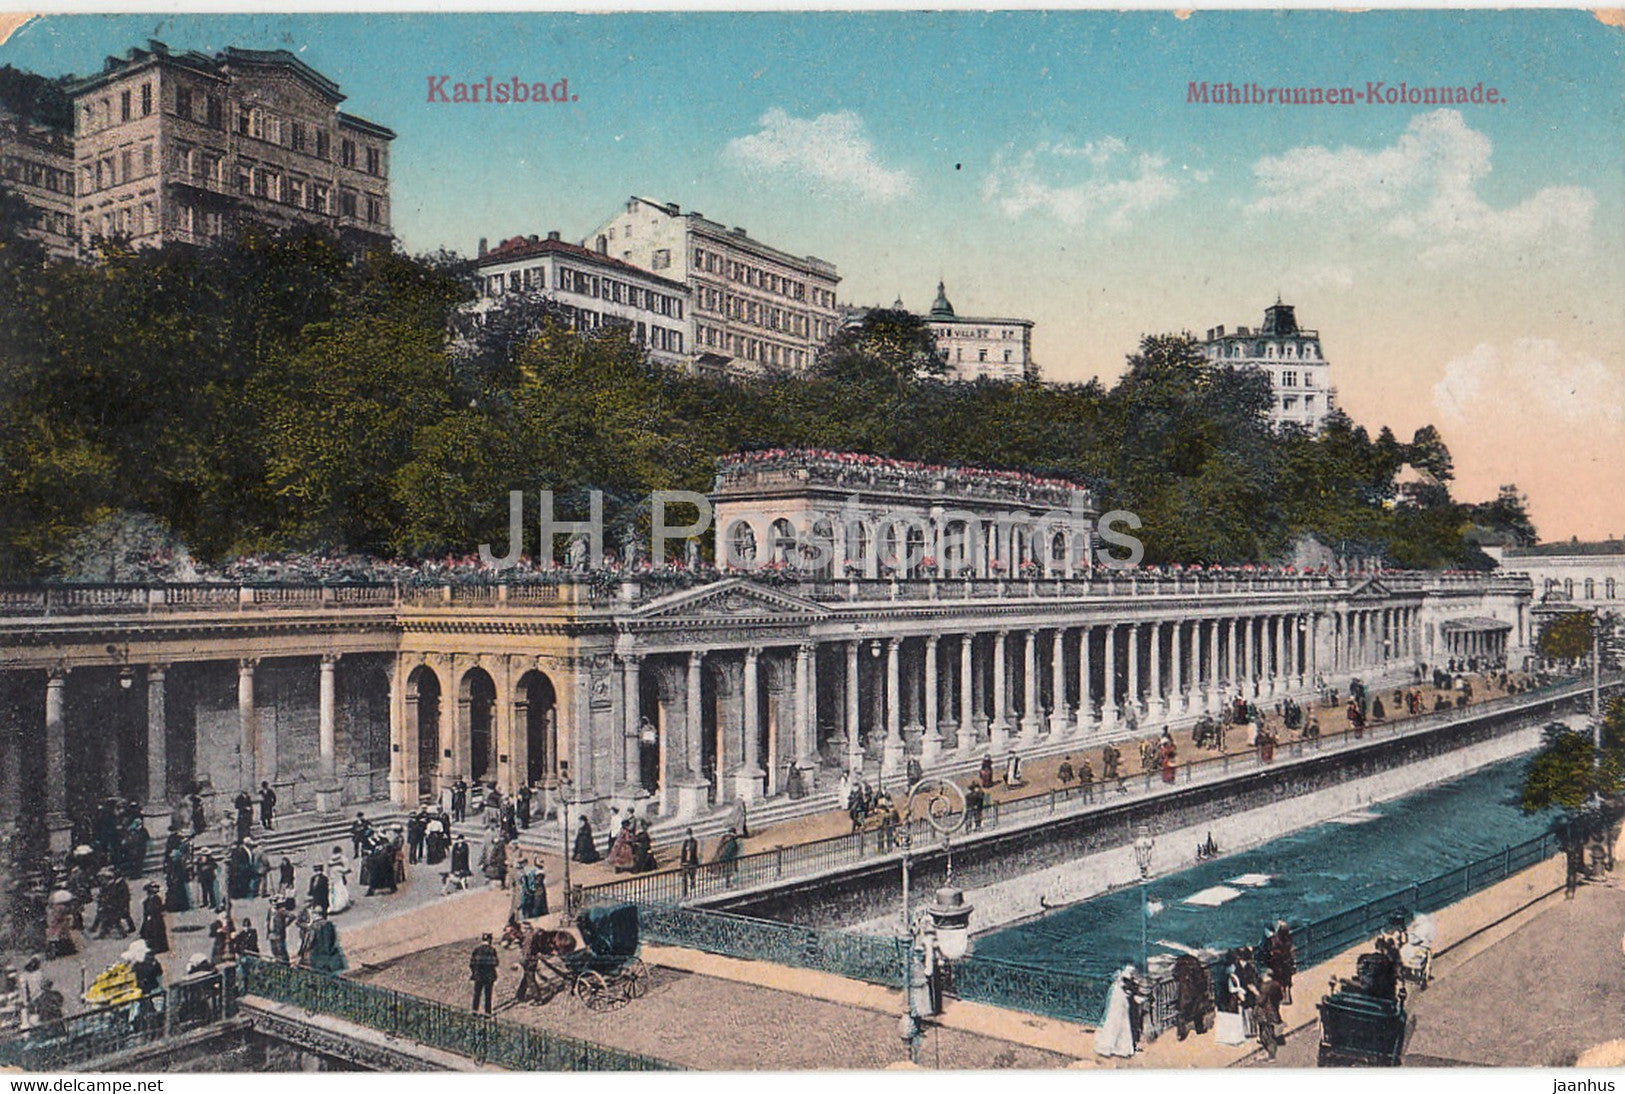 Karlovy Vary - Karlsbad - Muhlbrunnen Kolonnade - 11808 - old postcard - 1915 - Czechoslovakia - Czech Republic - used - JH Postcards